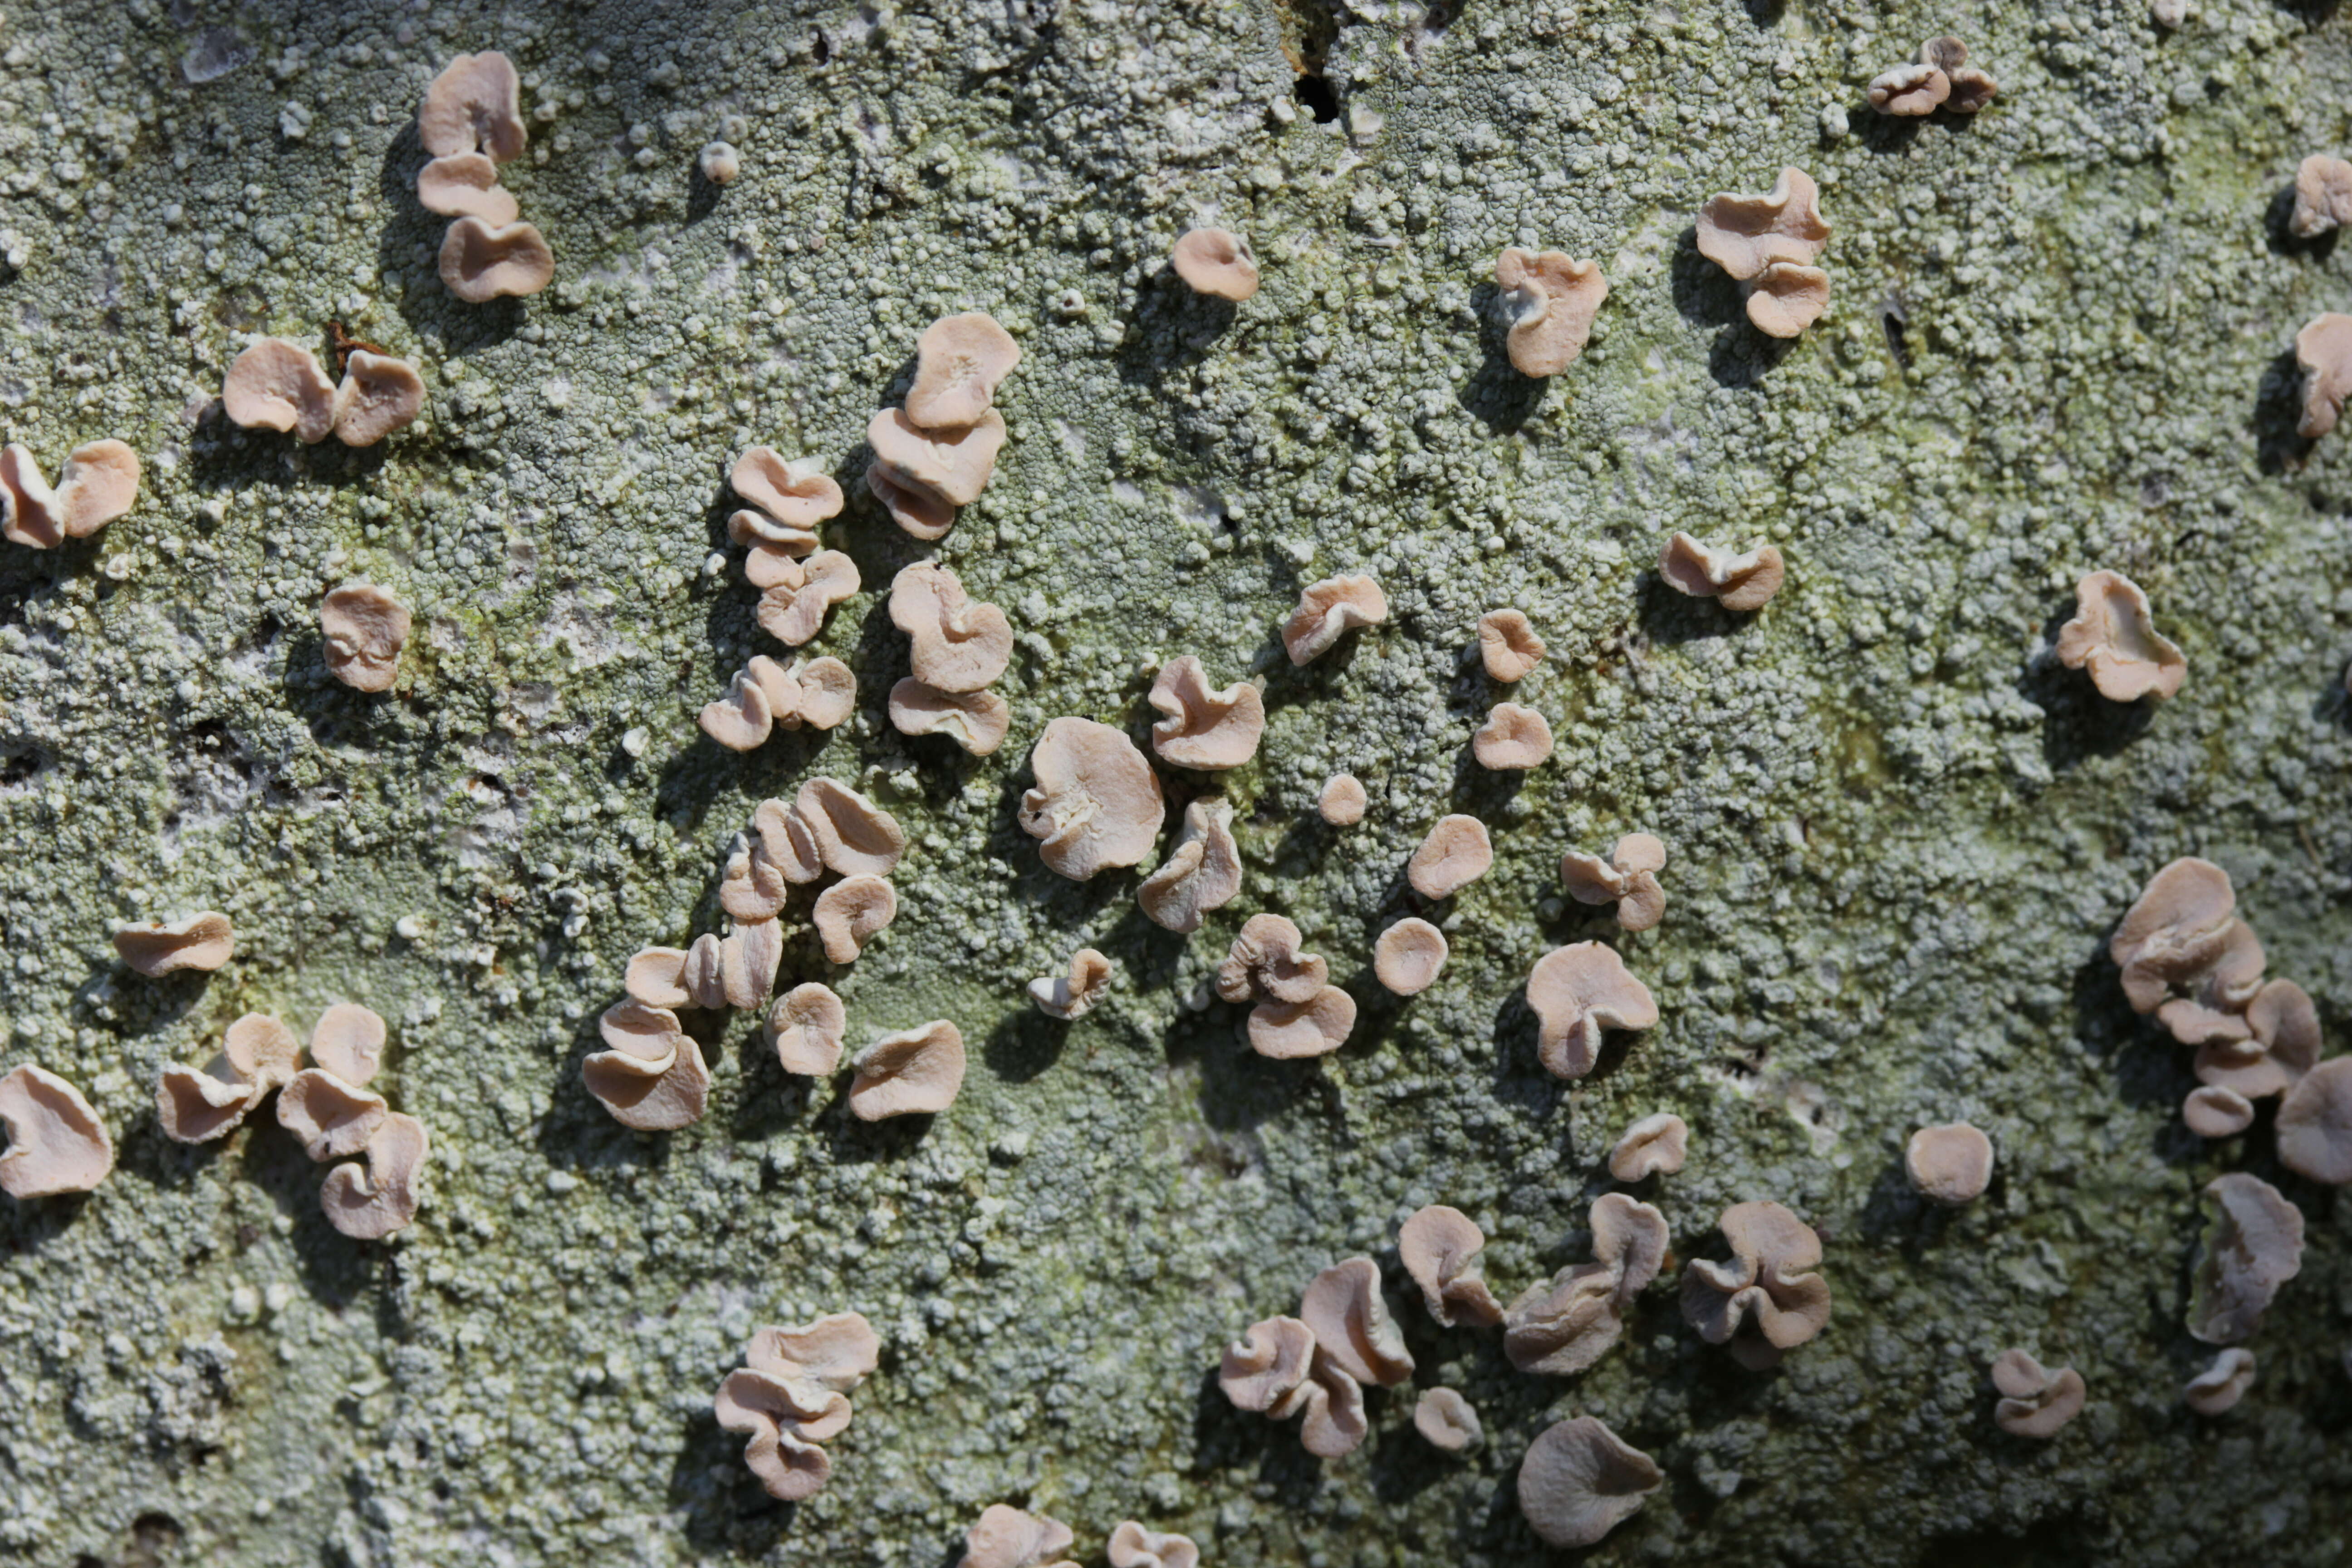 Image of peppermint drop lichen